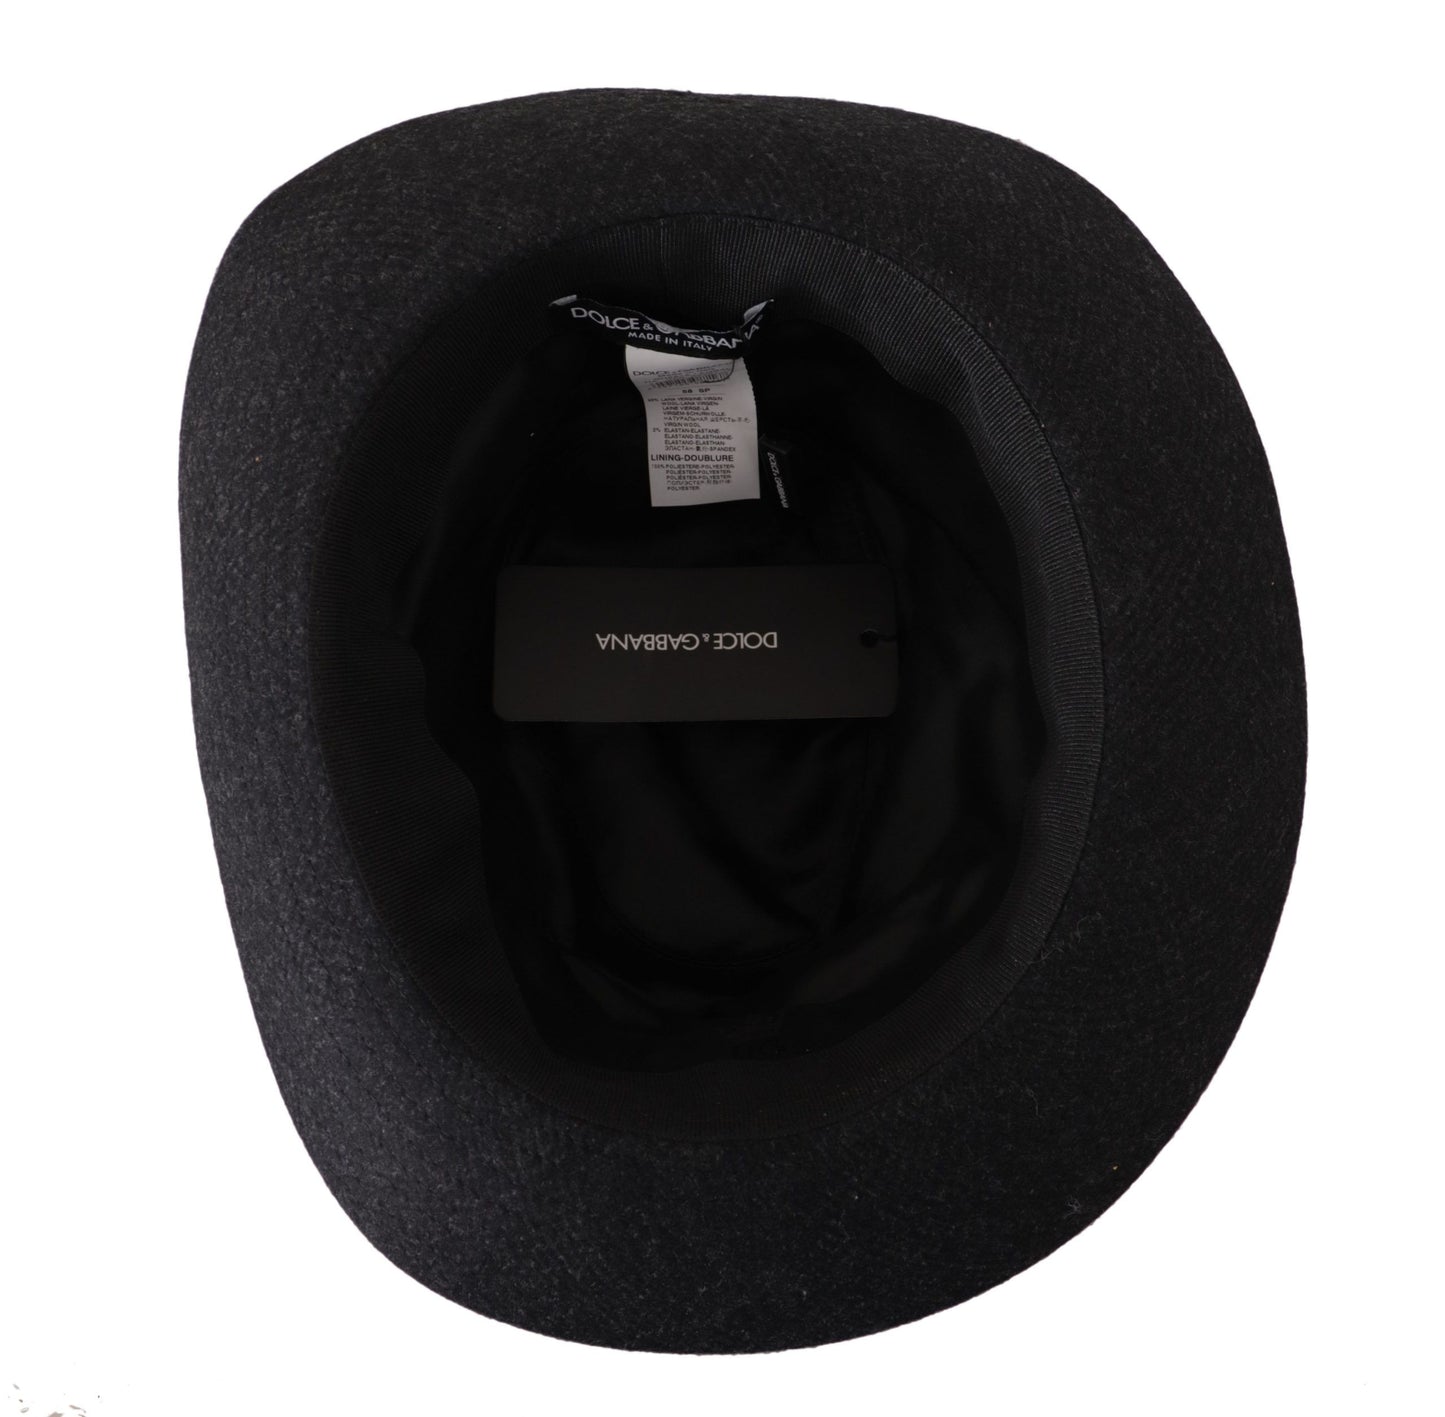 Elegant Gray Wool Fedora Hat